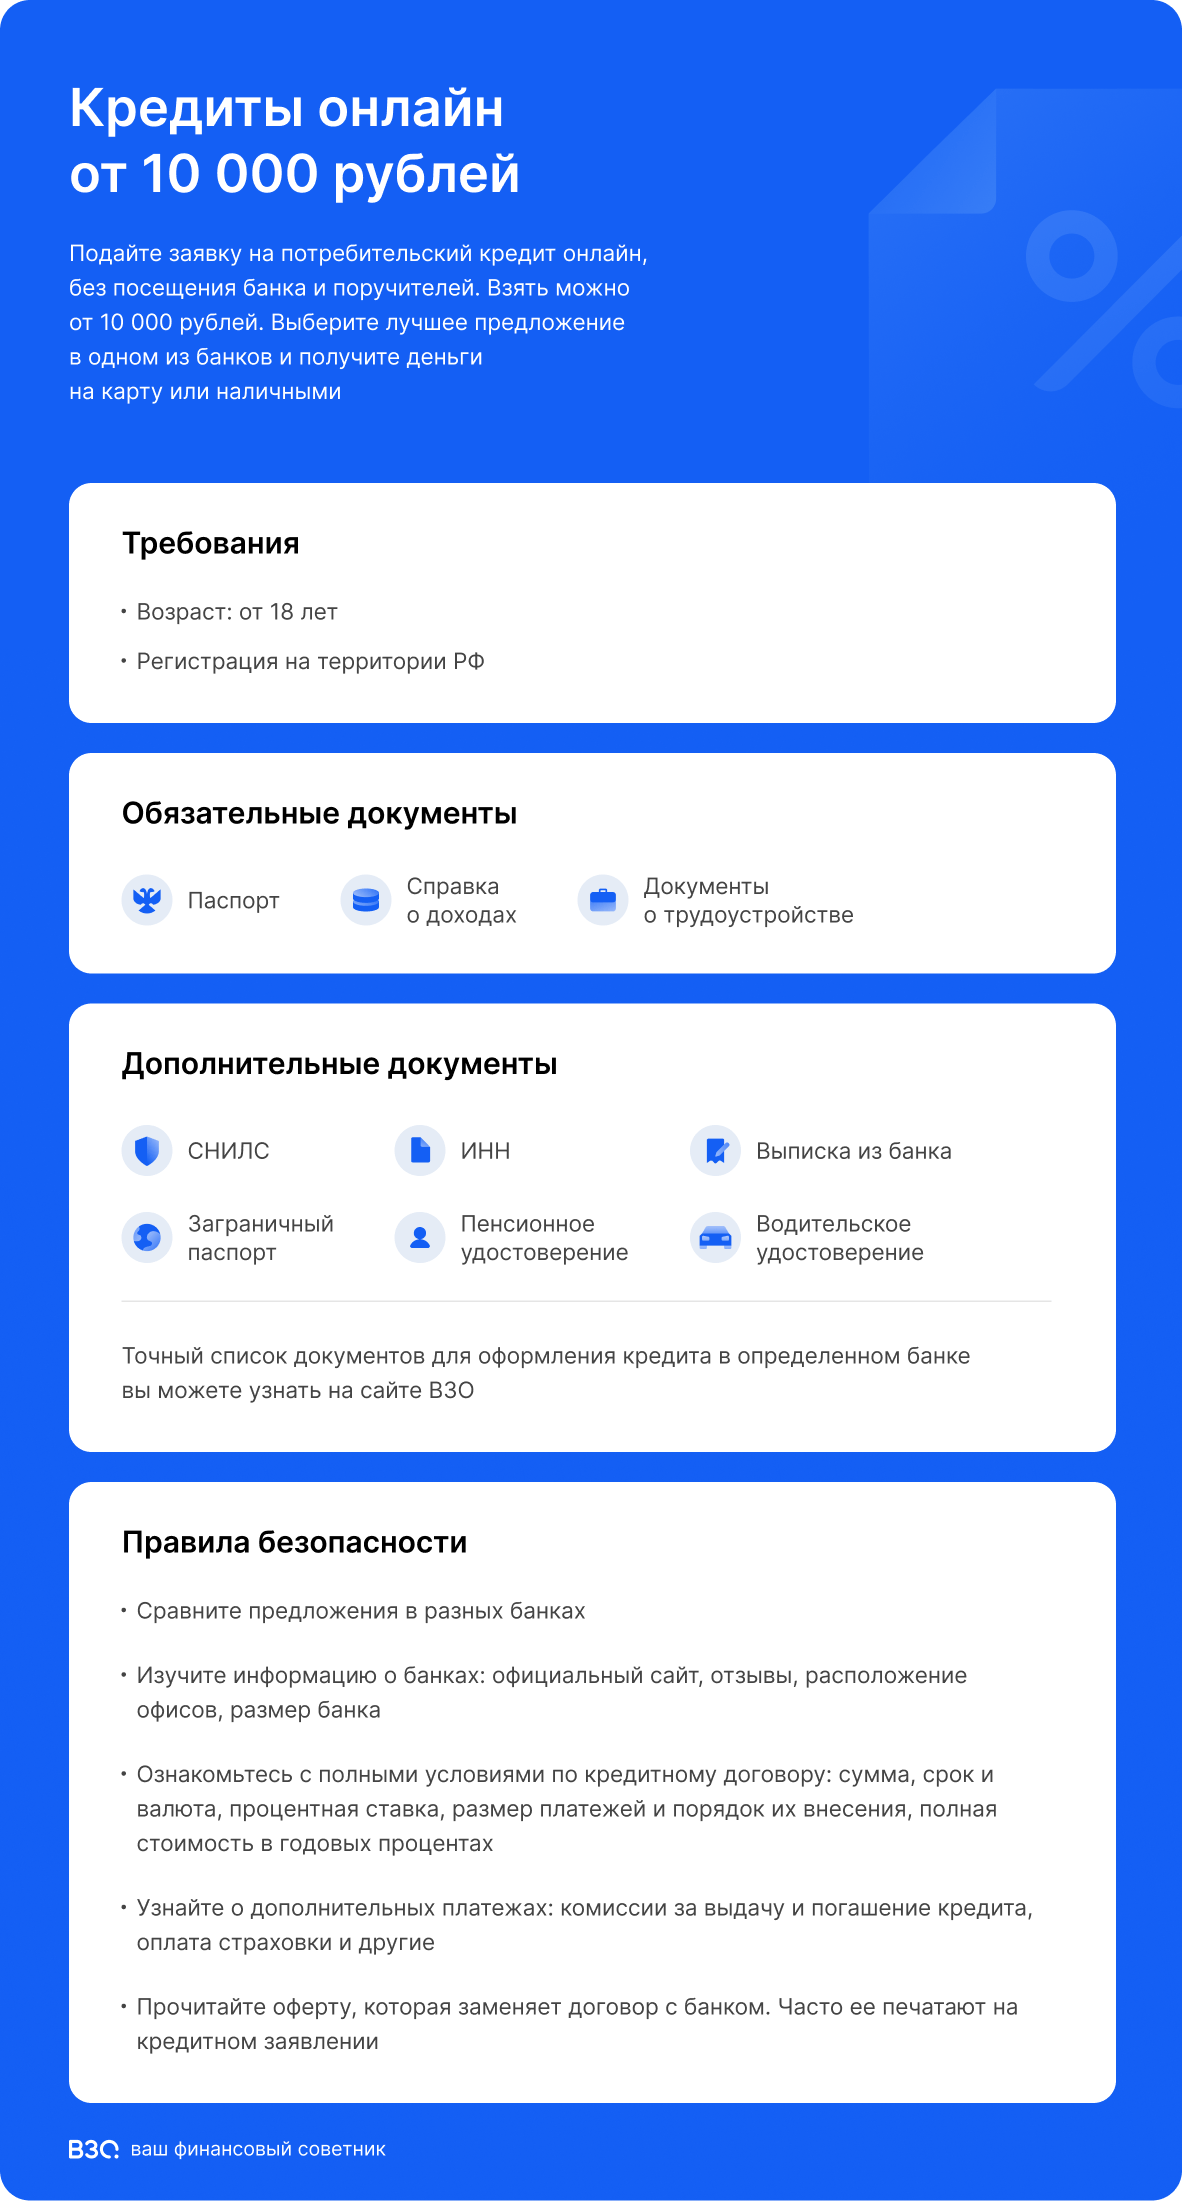 Кредиты онлайн от 10 000 рублей: инфографика